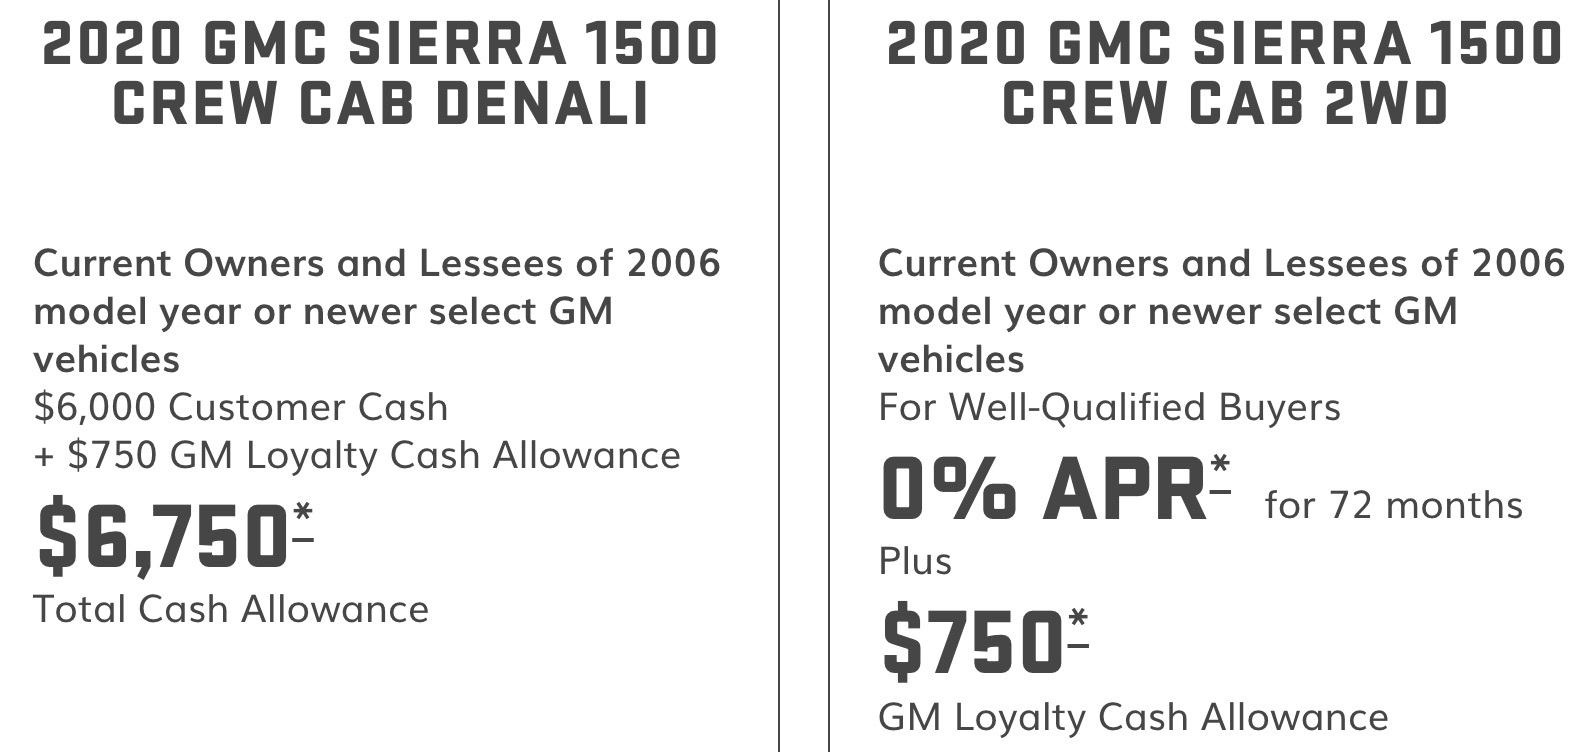 GMC Sierra 1500 Rebate Totals 9 000 In January 2020 GM Authority